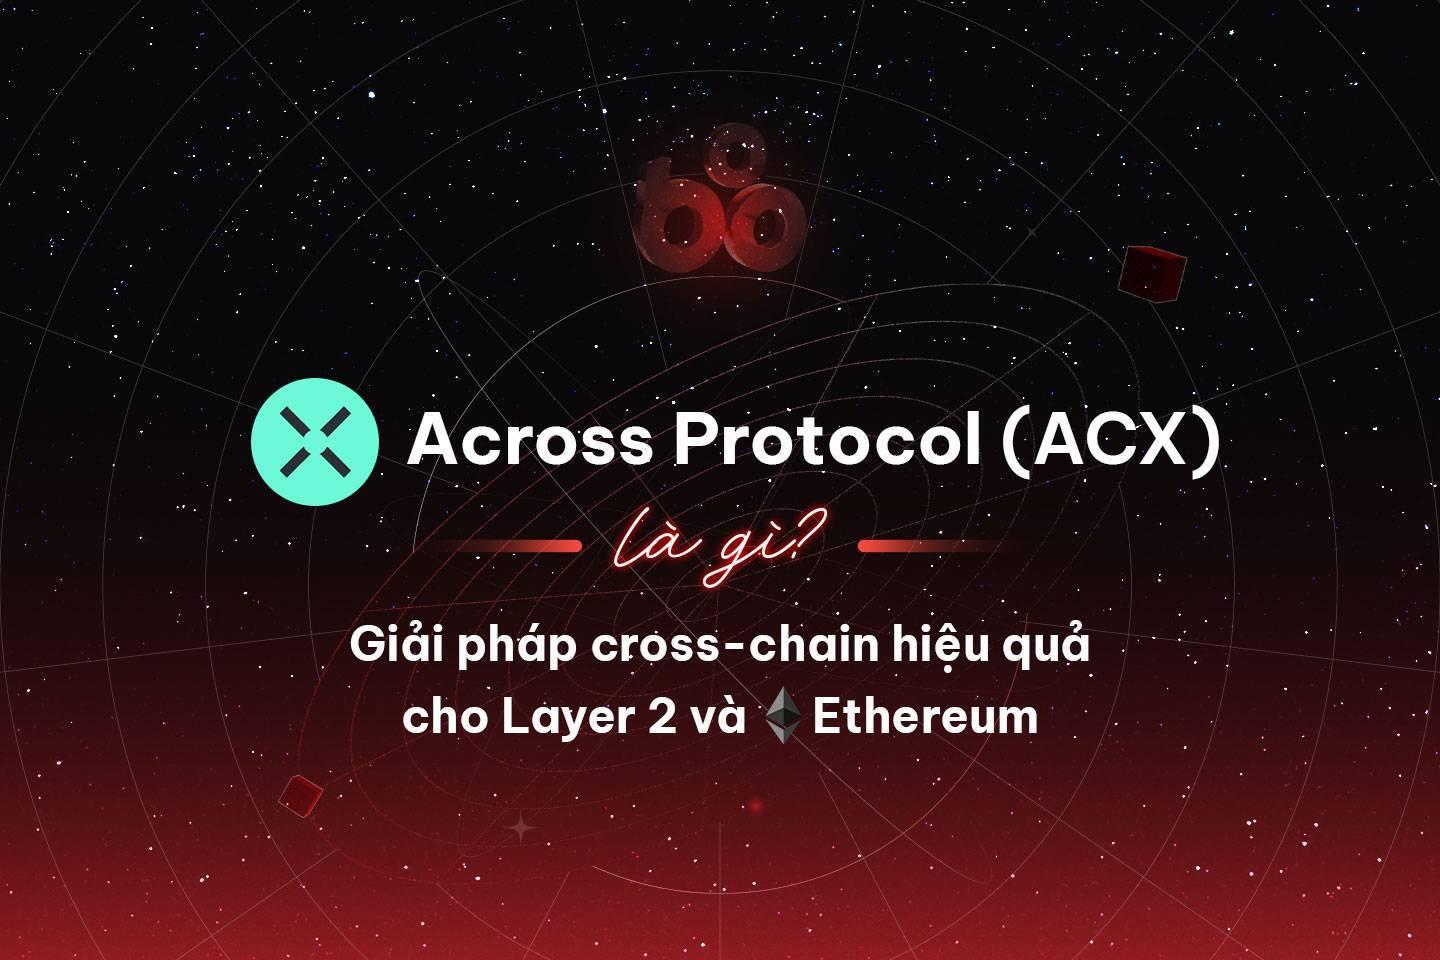 across-protocol-acx-la-gi-giai-phap-cross-chain-hieu-qua-cho-layer-2-va-ethereum